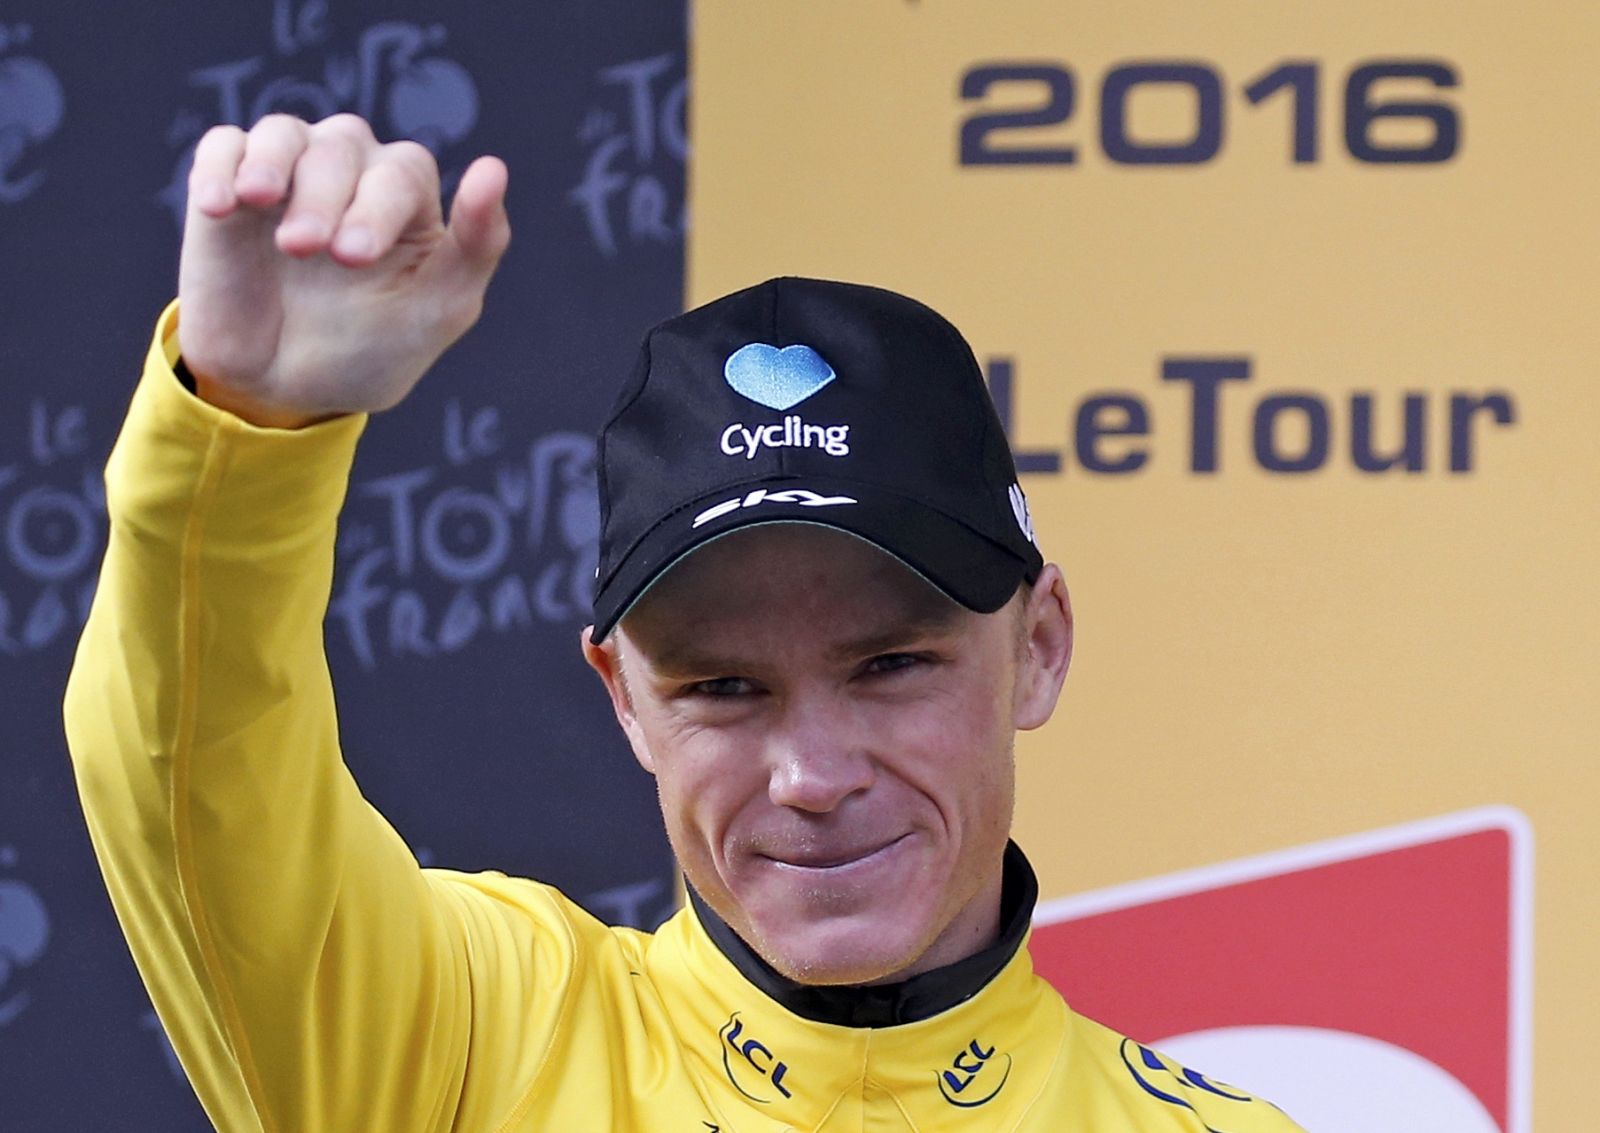 Imagen del líder del Tour de Francia, Chris Froome, en el podio de Morzine.